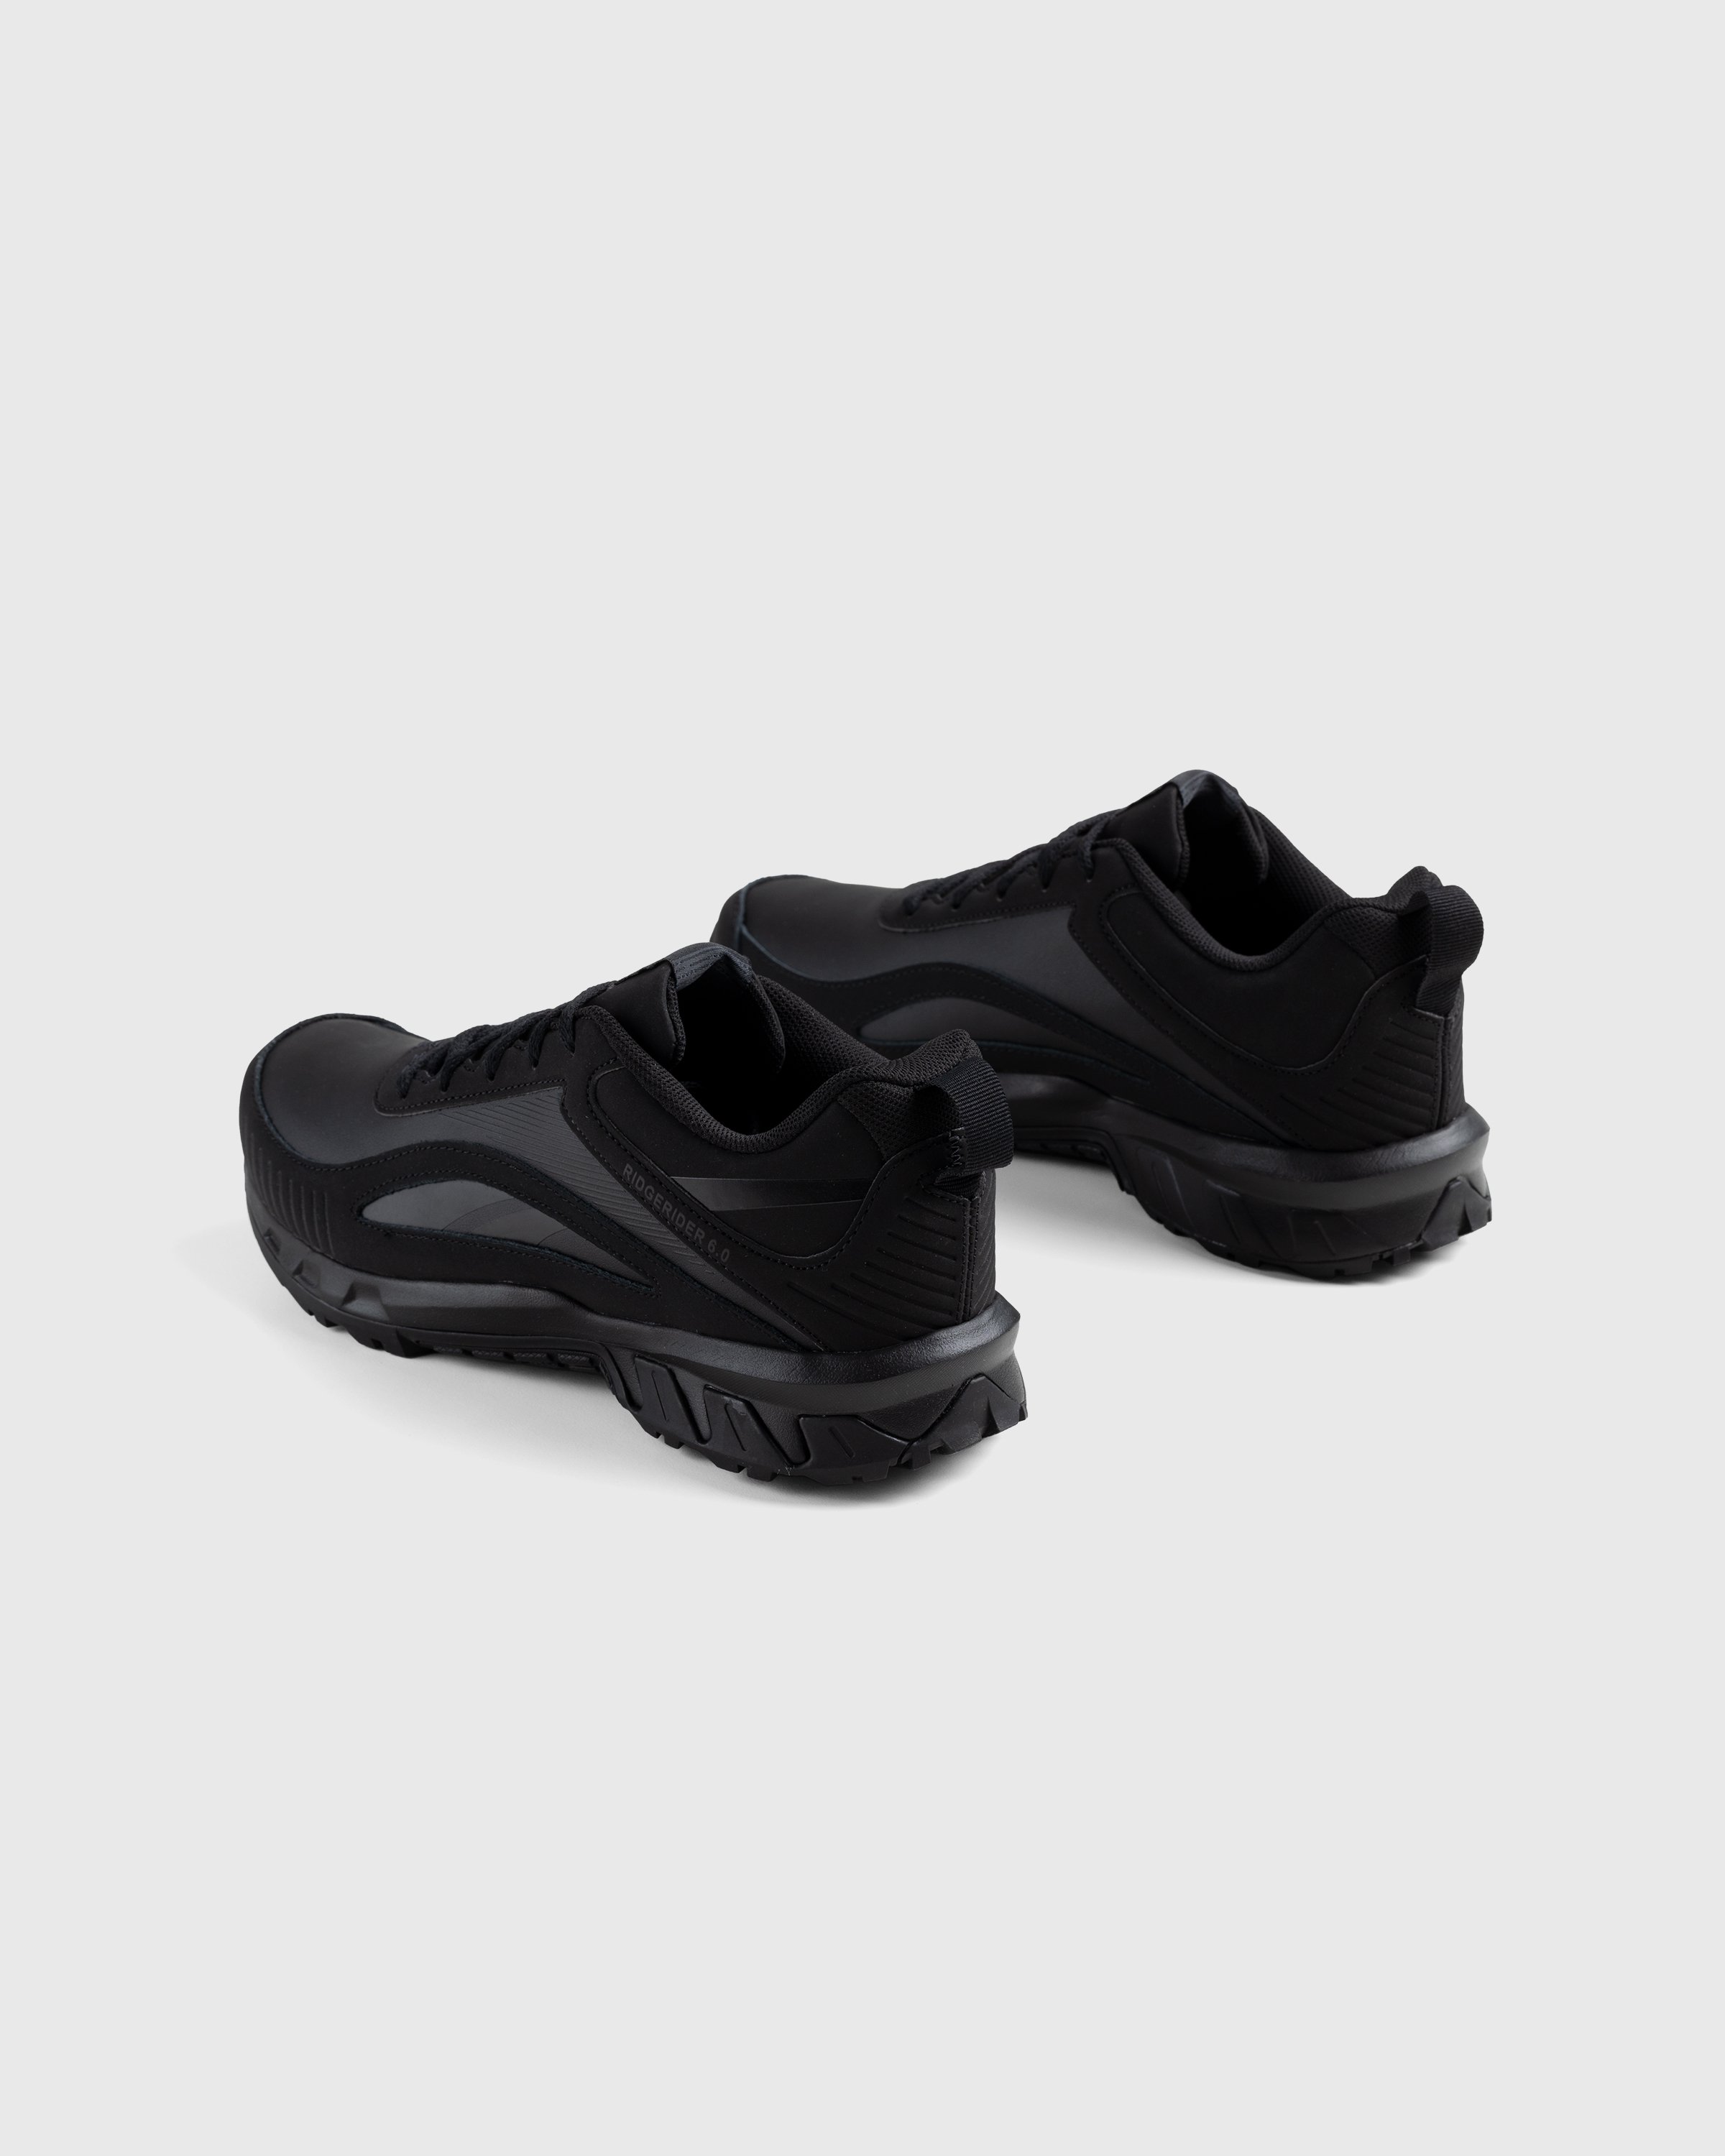 Reebok - Ridgerider 6.0 Leather Black - Footwear - Black - Image 5